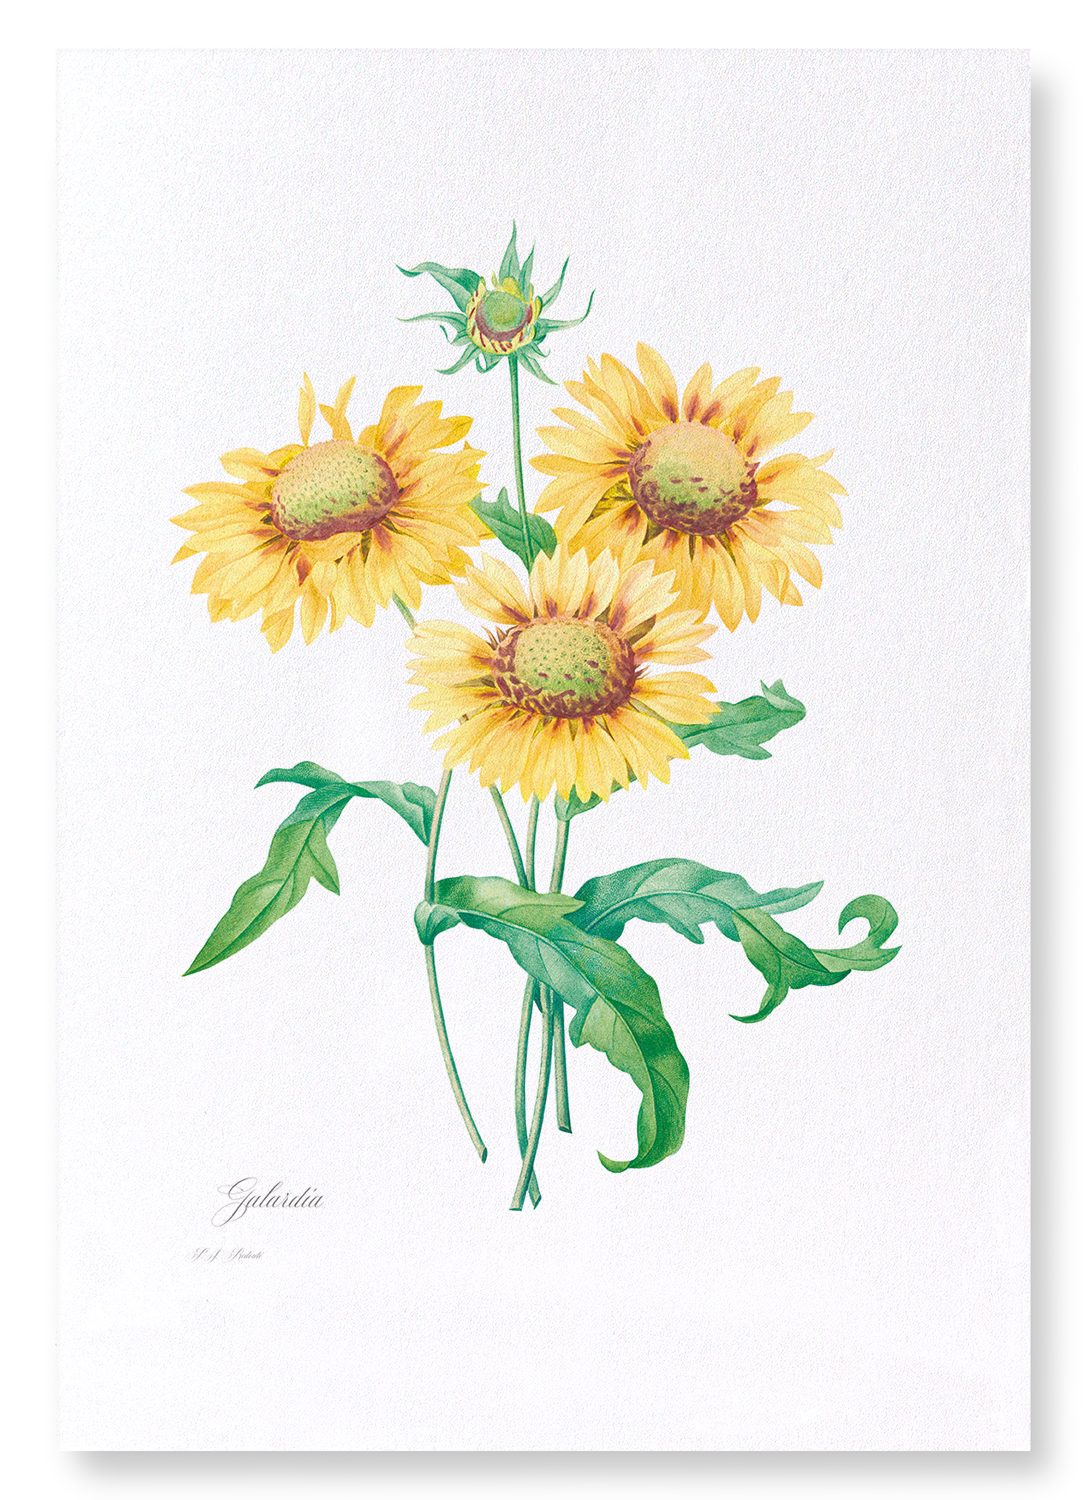 GALLARDIA BLANKET FLOWER: Botanical Art Print